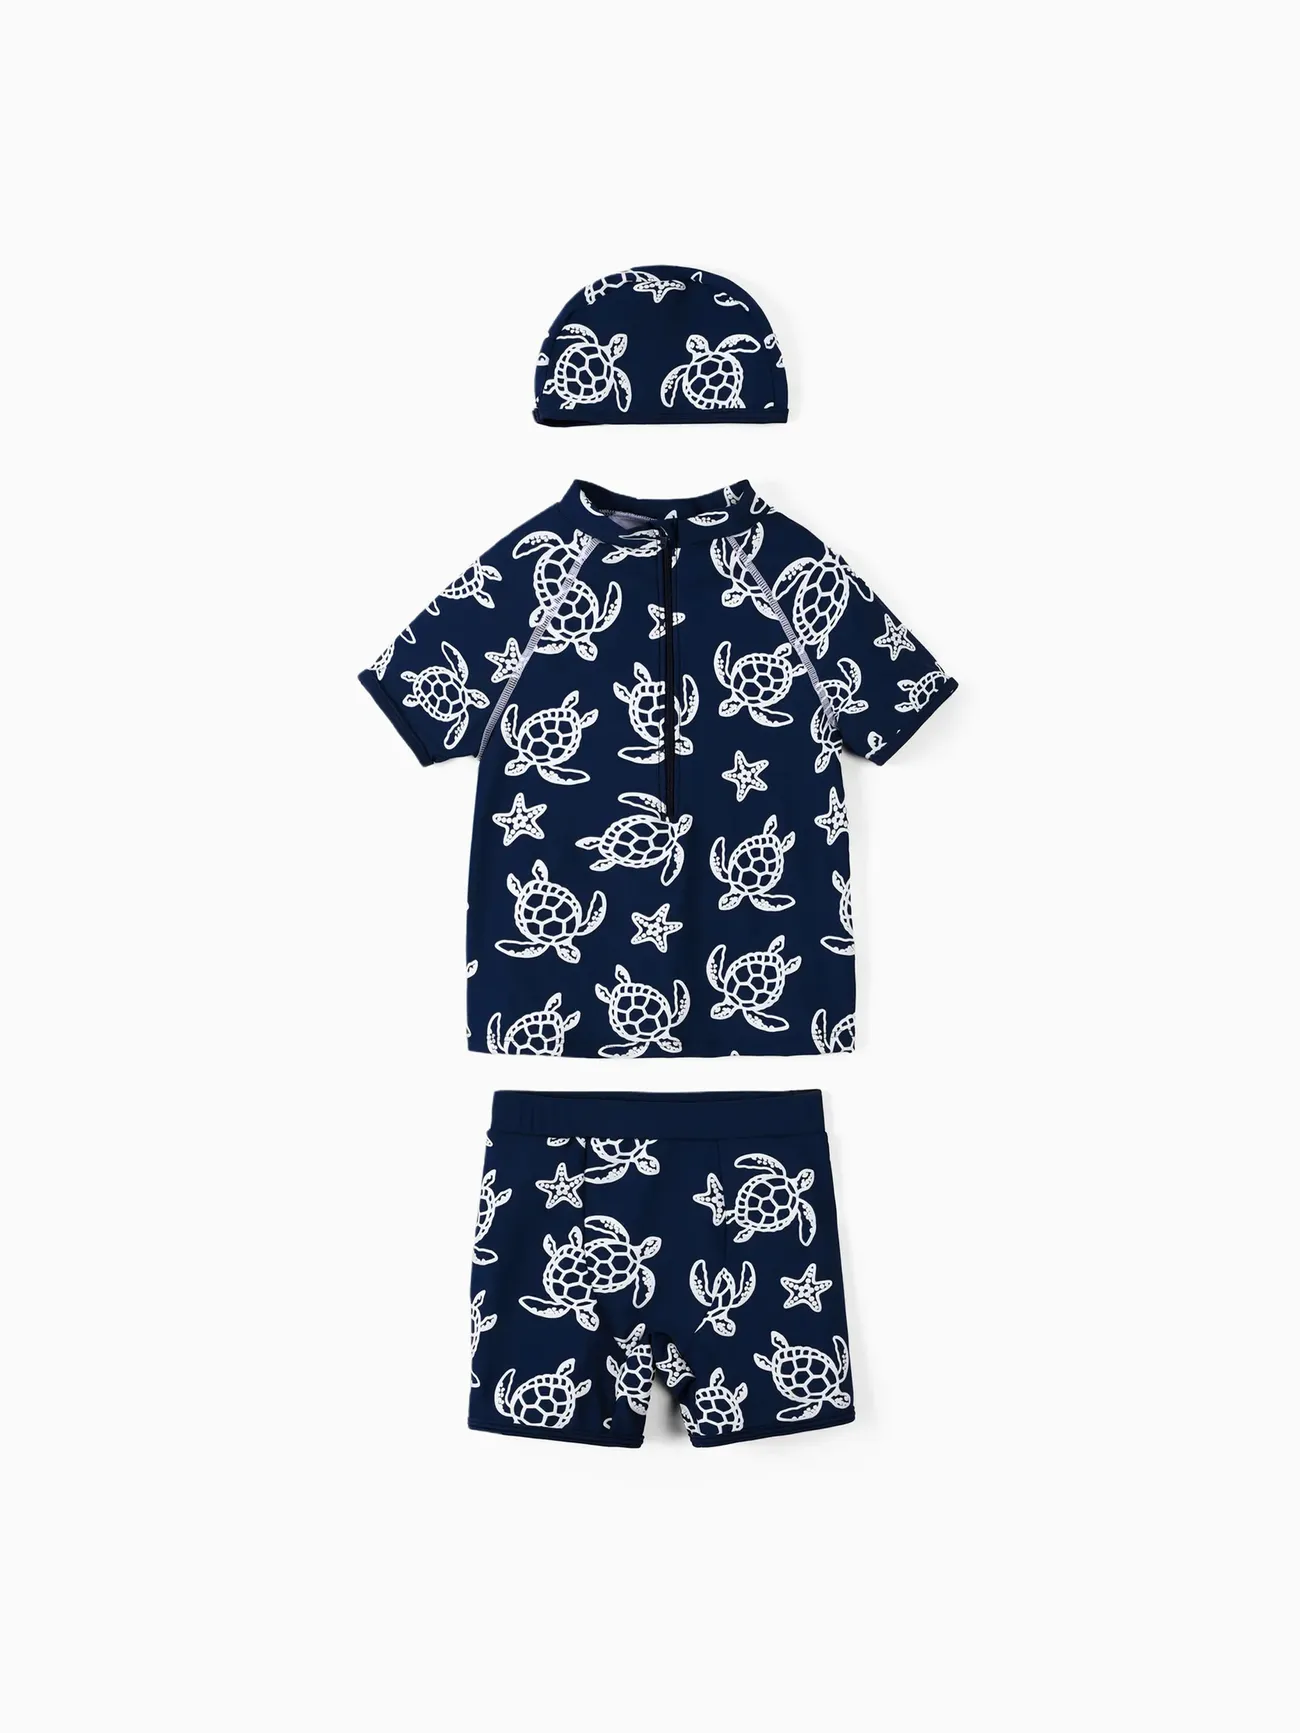 Toddler Boy/Girl 3pcs Water-reactive Marine Animal Print Swimsuits Set DeepBlue big image 1